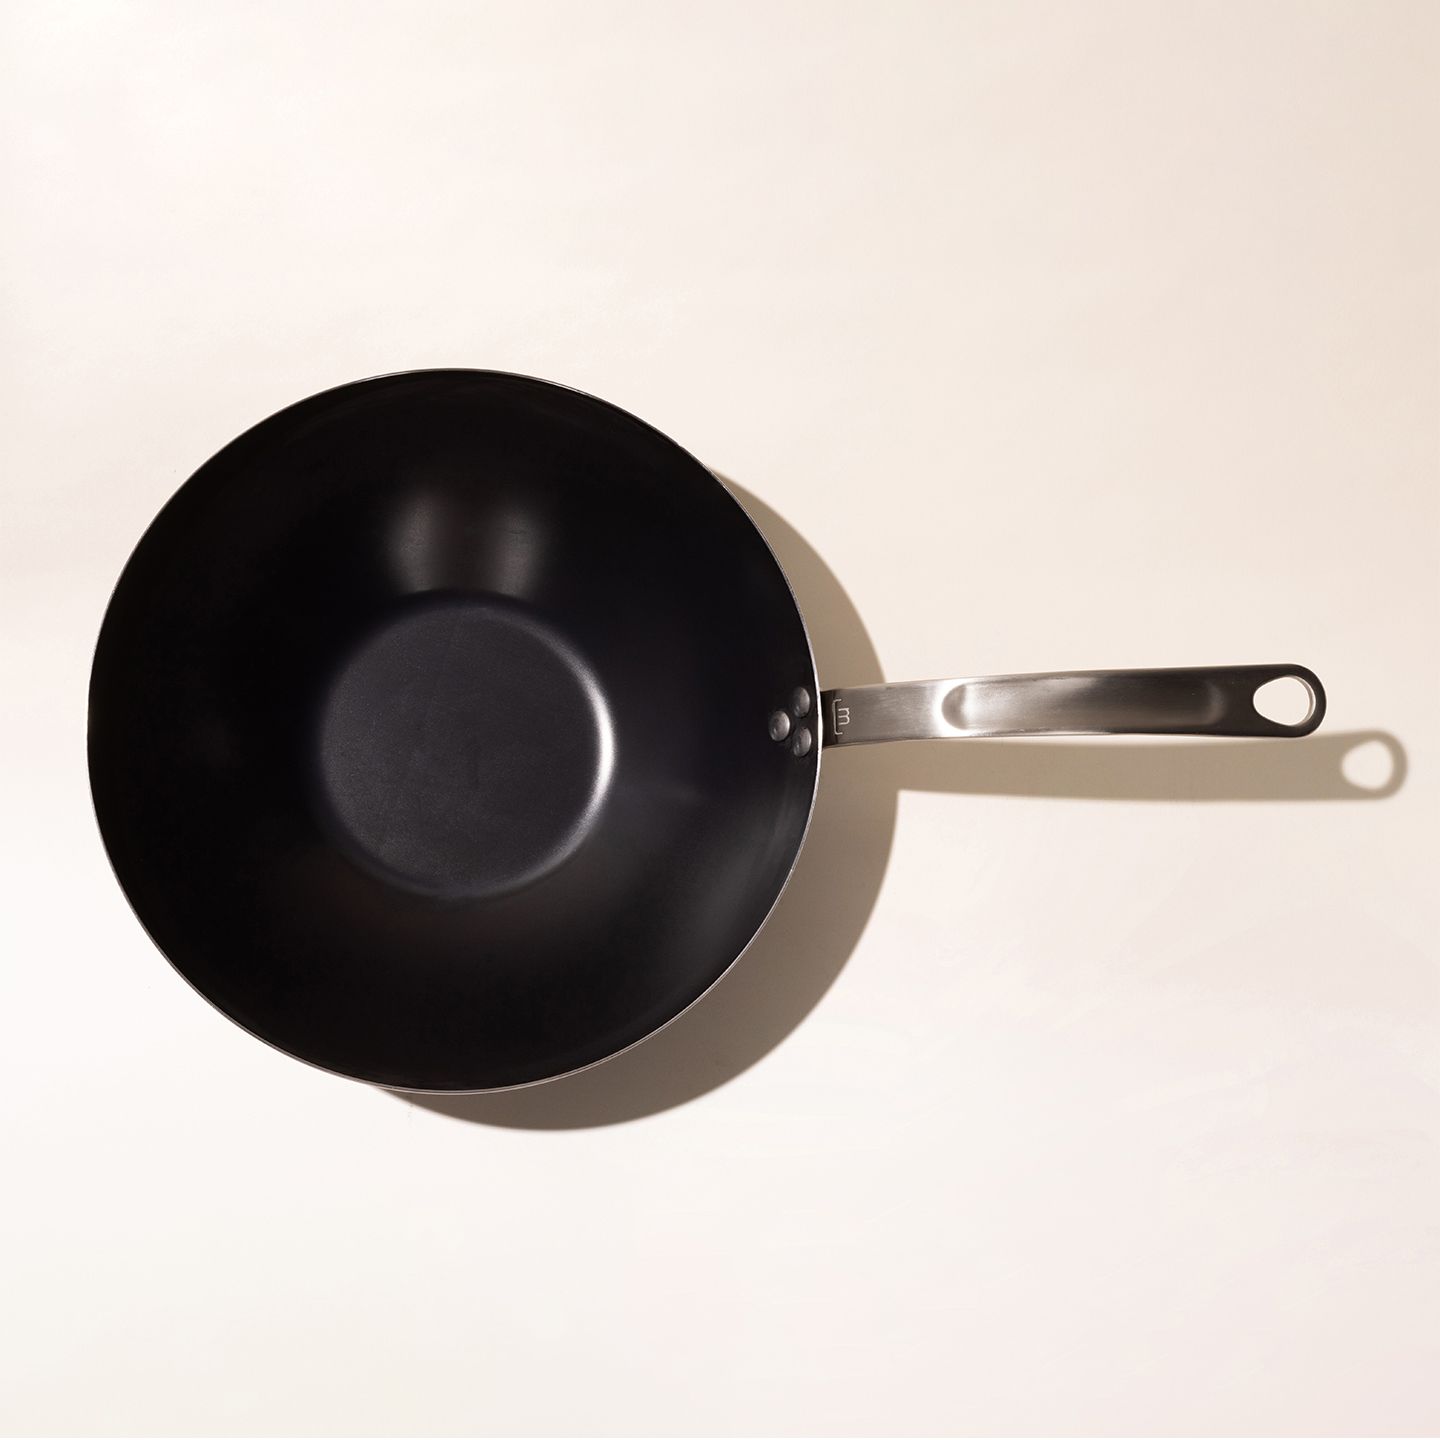 HexClad Hybrid Nonstick 14-Inch Frying Pan with Macao